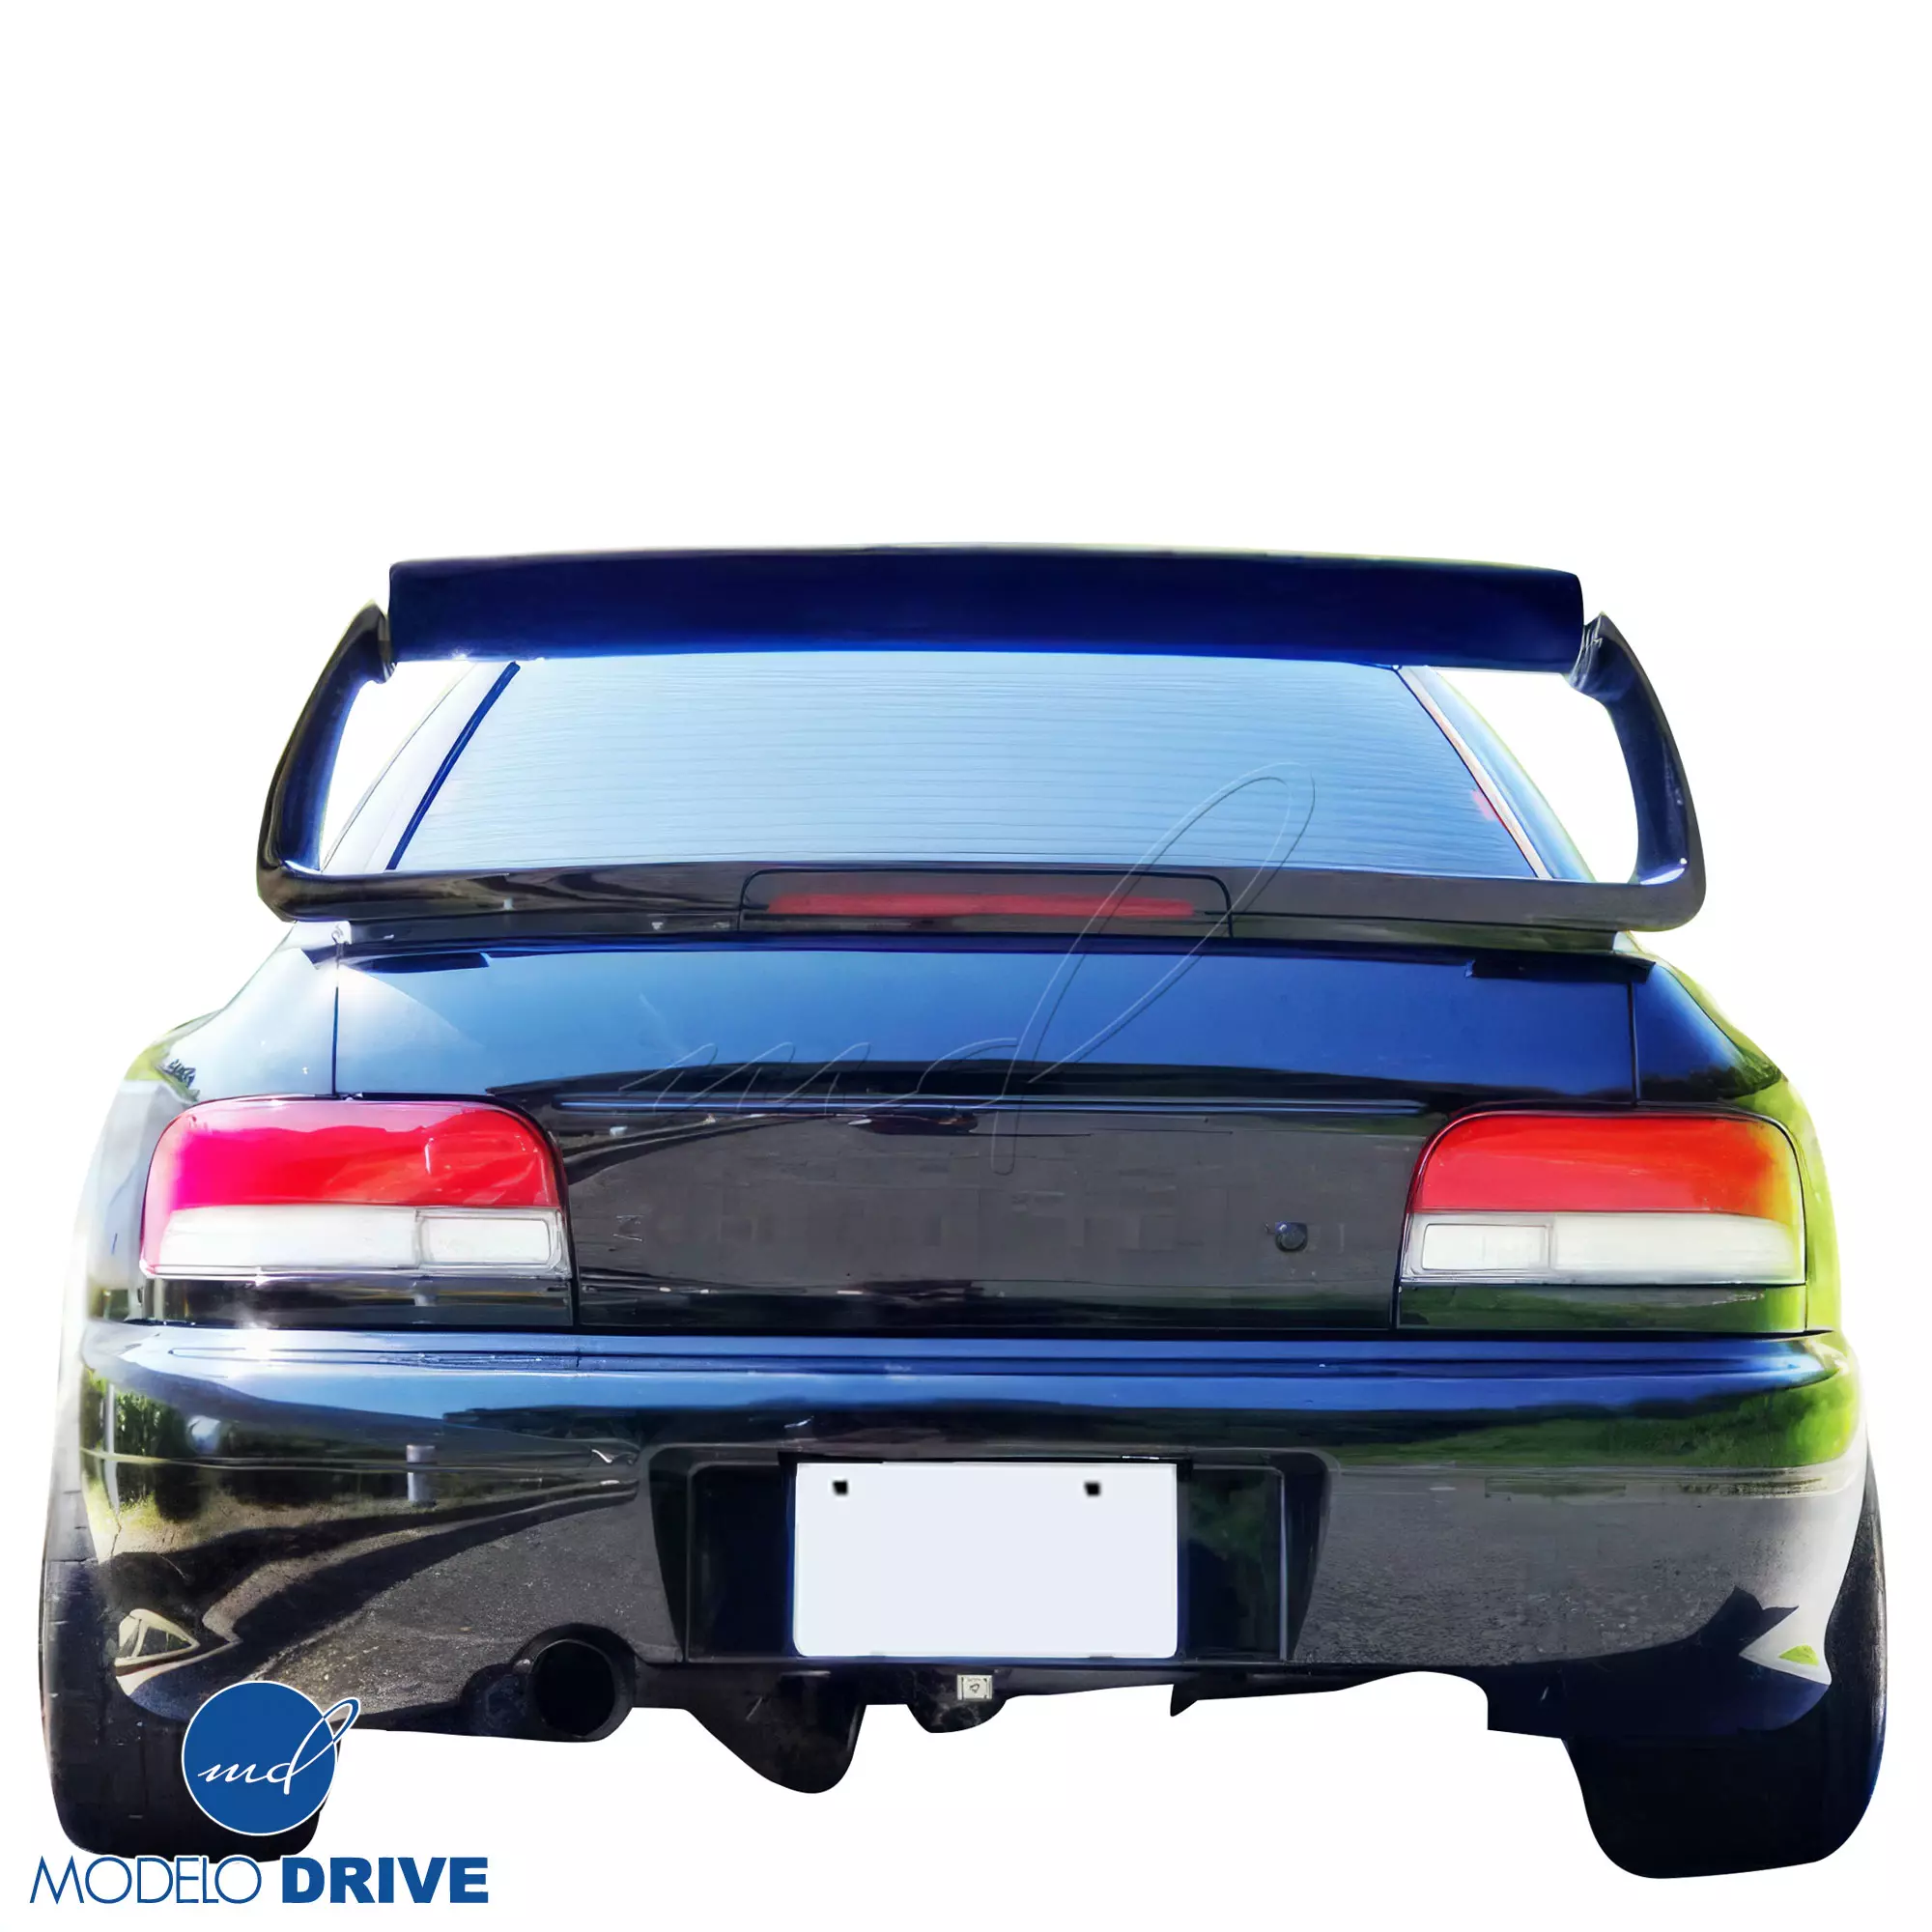 ModeloDrive Partial Carbon Fiber 22B Trunk Spoiler Wing Adjustable w LED > Subaru Impreza (GC8) 1993-2001 > 2/4dr - Image 2